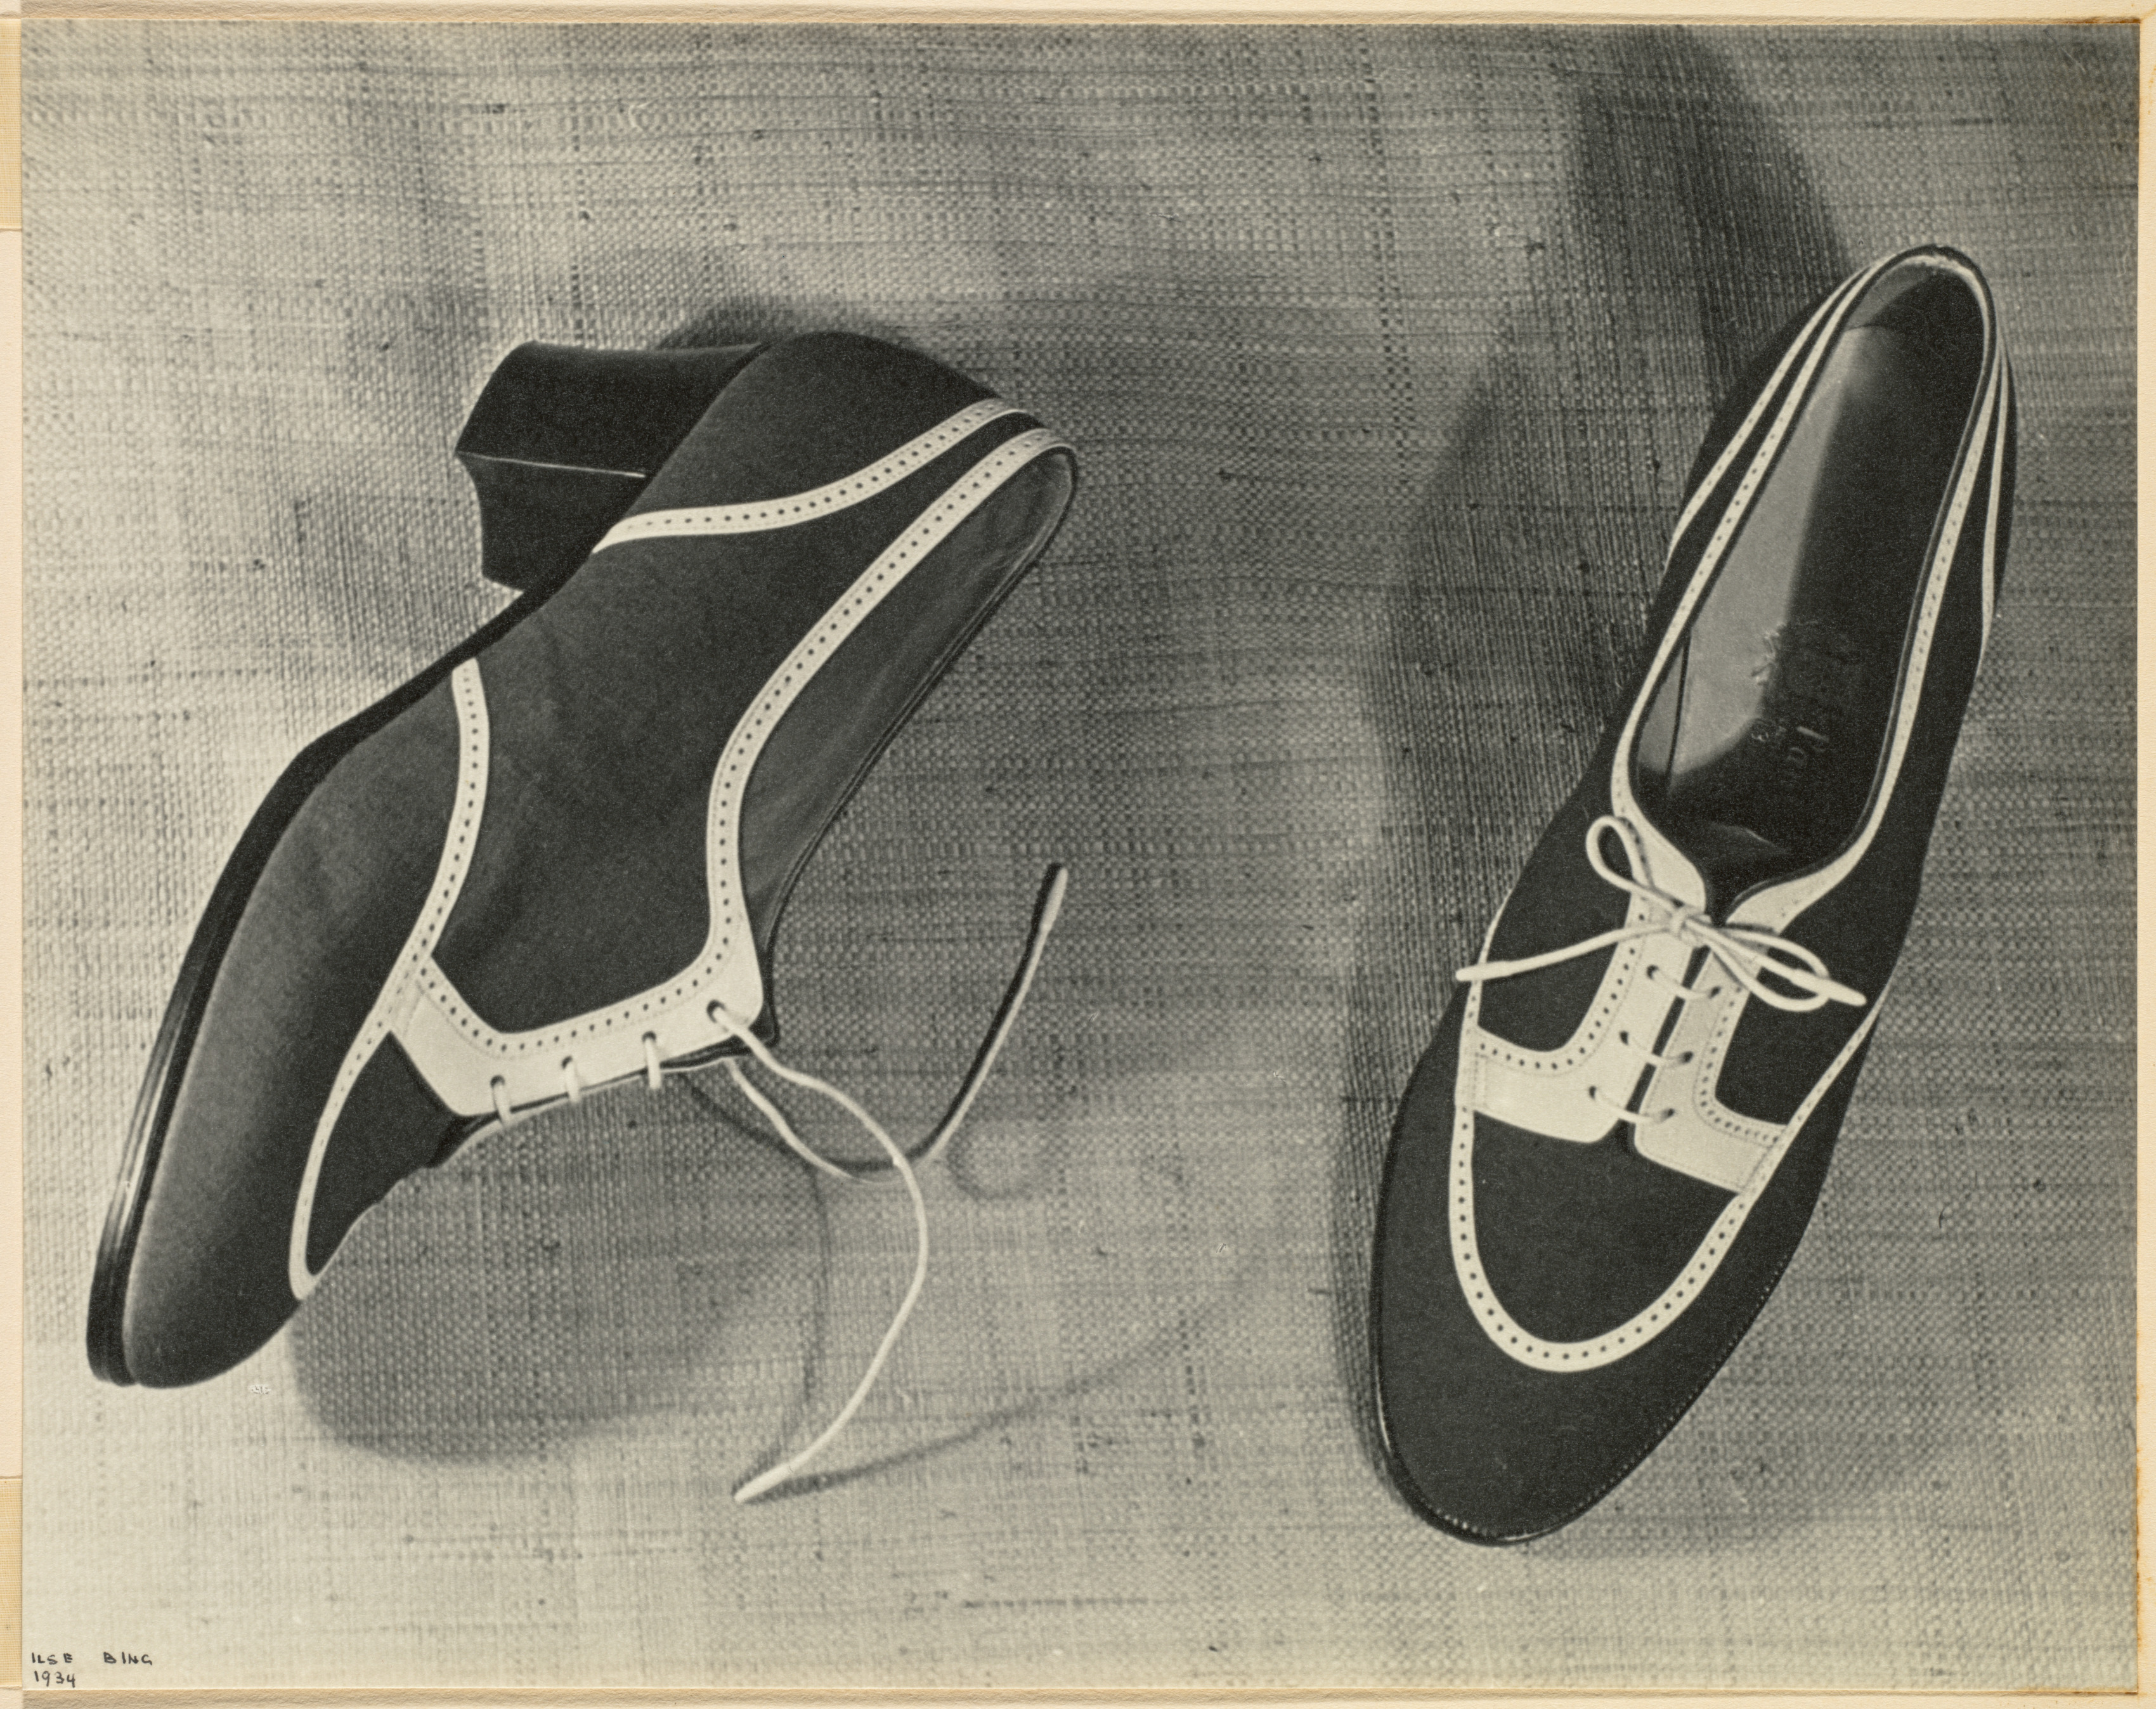 Two-Toned Paul Bernard Shoes against Burlap Background